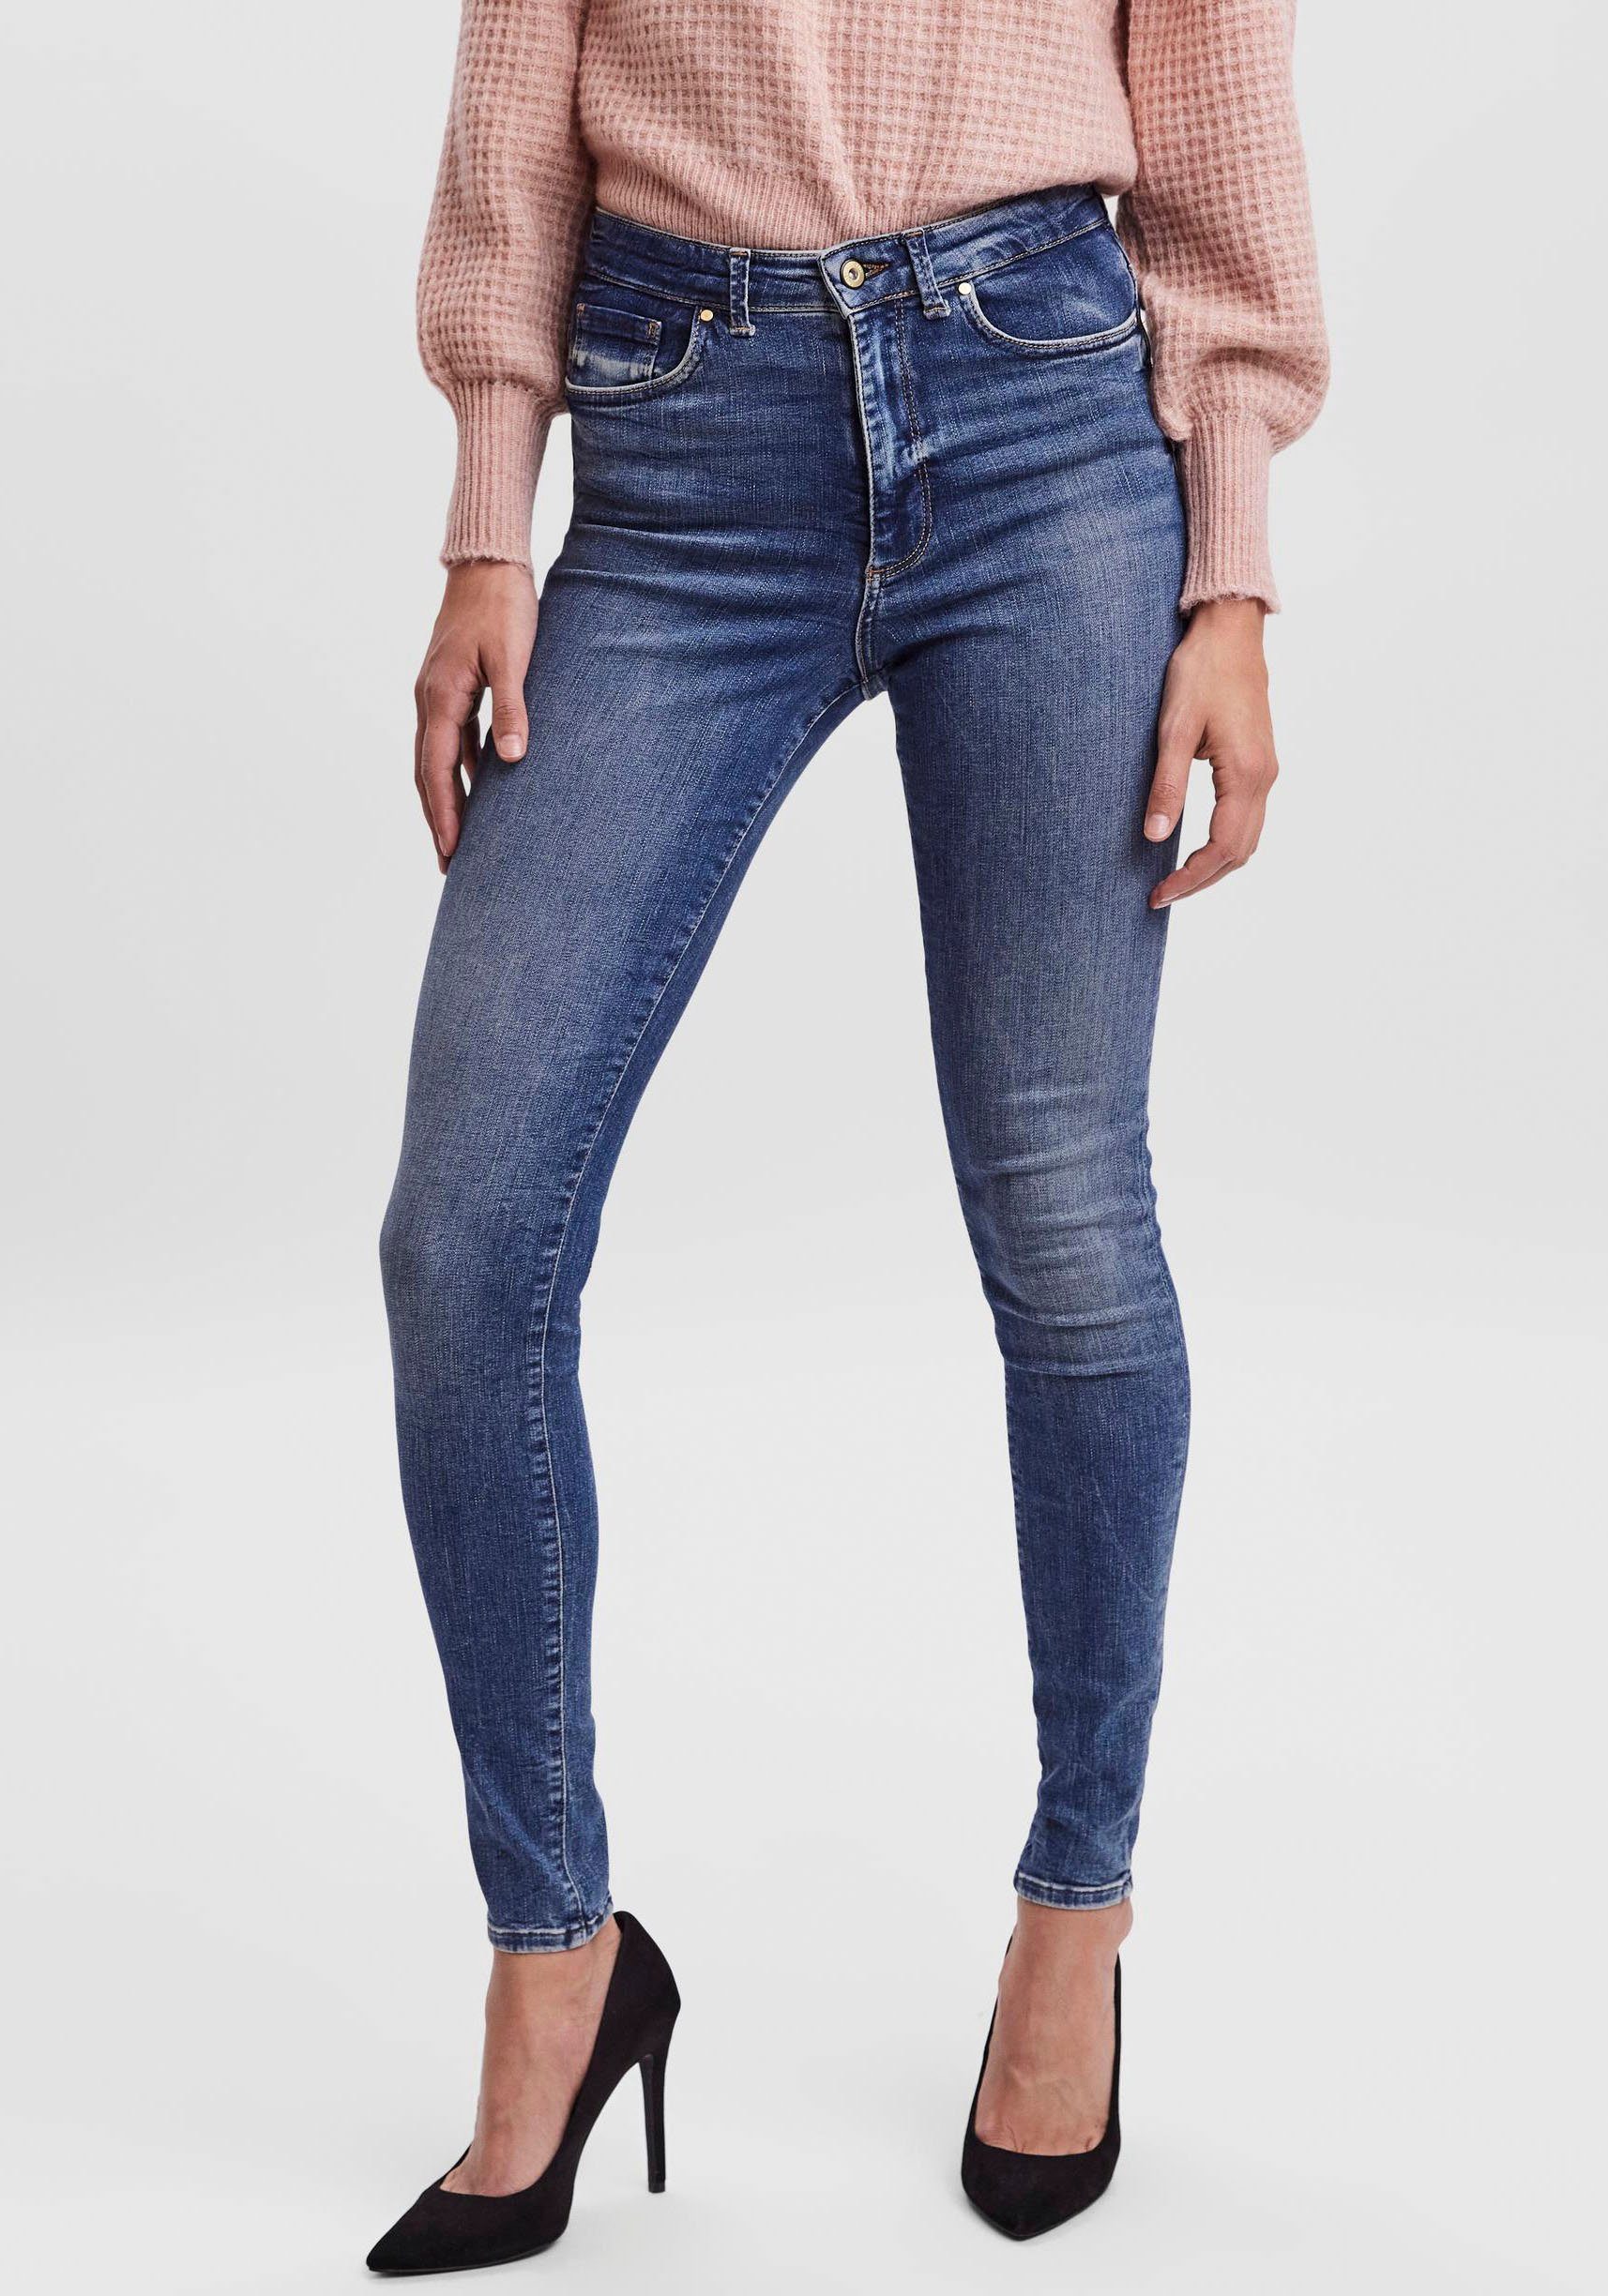 HR medium RI372 NOOS VMSOPHIA Moda Vero denim High-waist-Jeans JEANS SKINNY blue